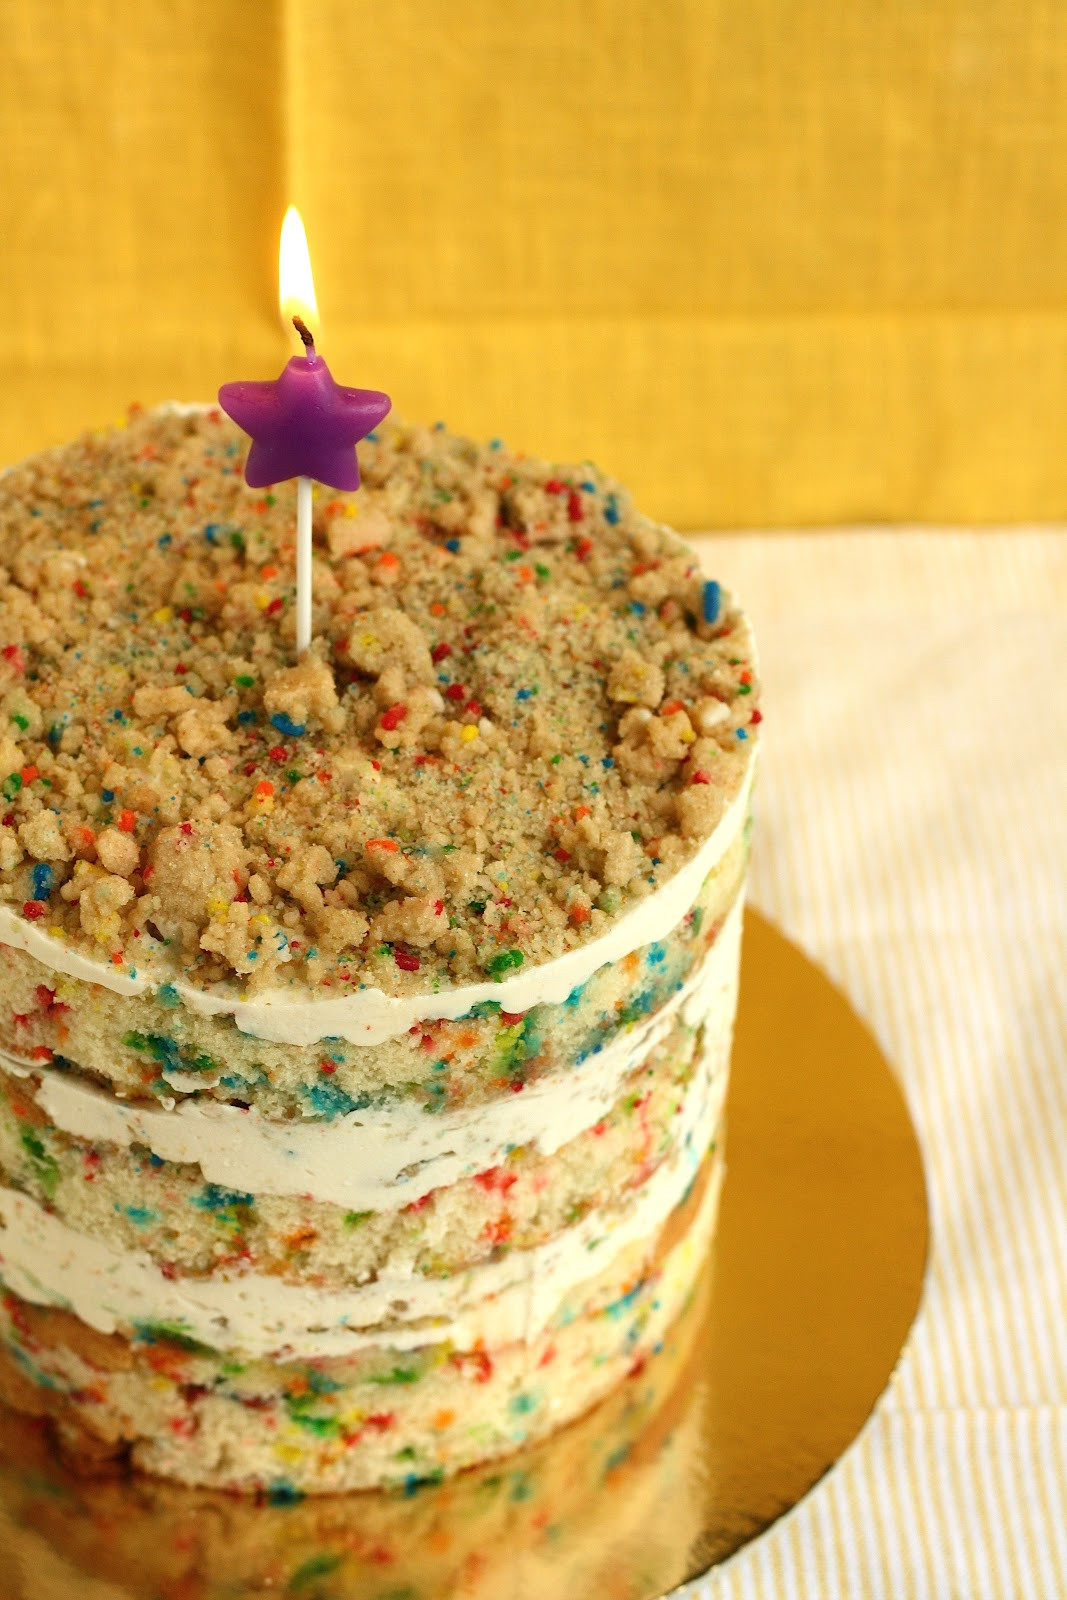 Best ideas about Momofuku Milk Bar Birthday Cake
. Save or Pin Funfetti Birthday Layer Cake from Momofuku Milk Bar Now.